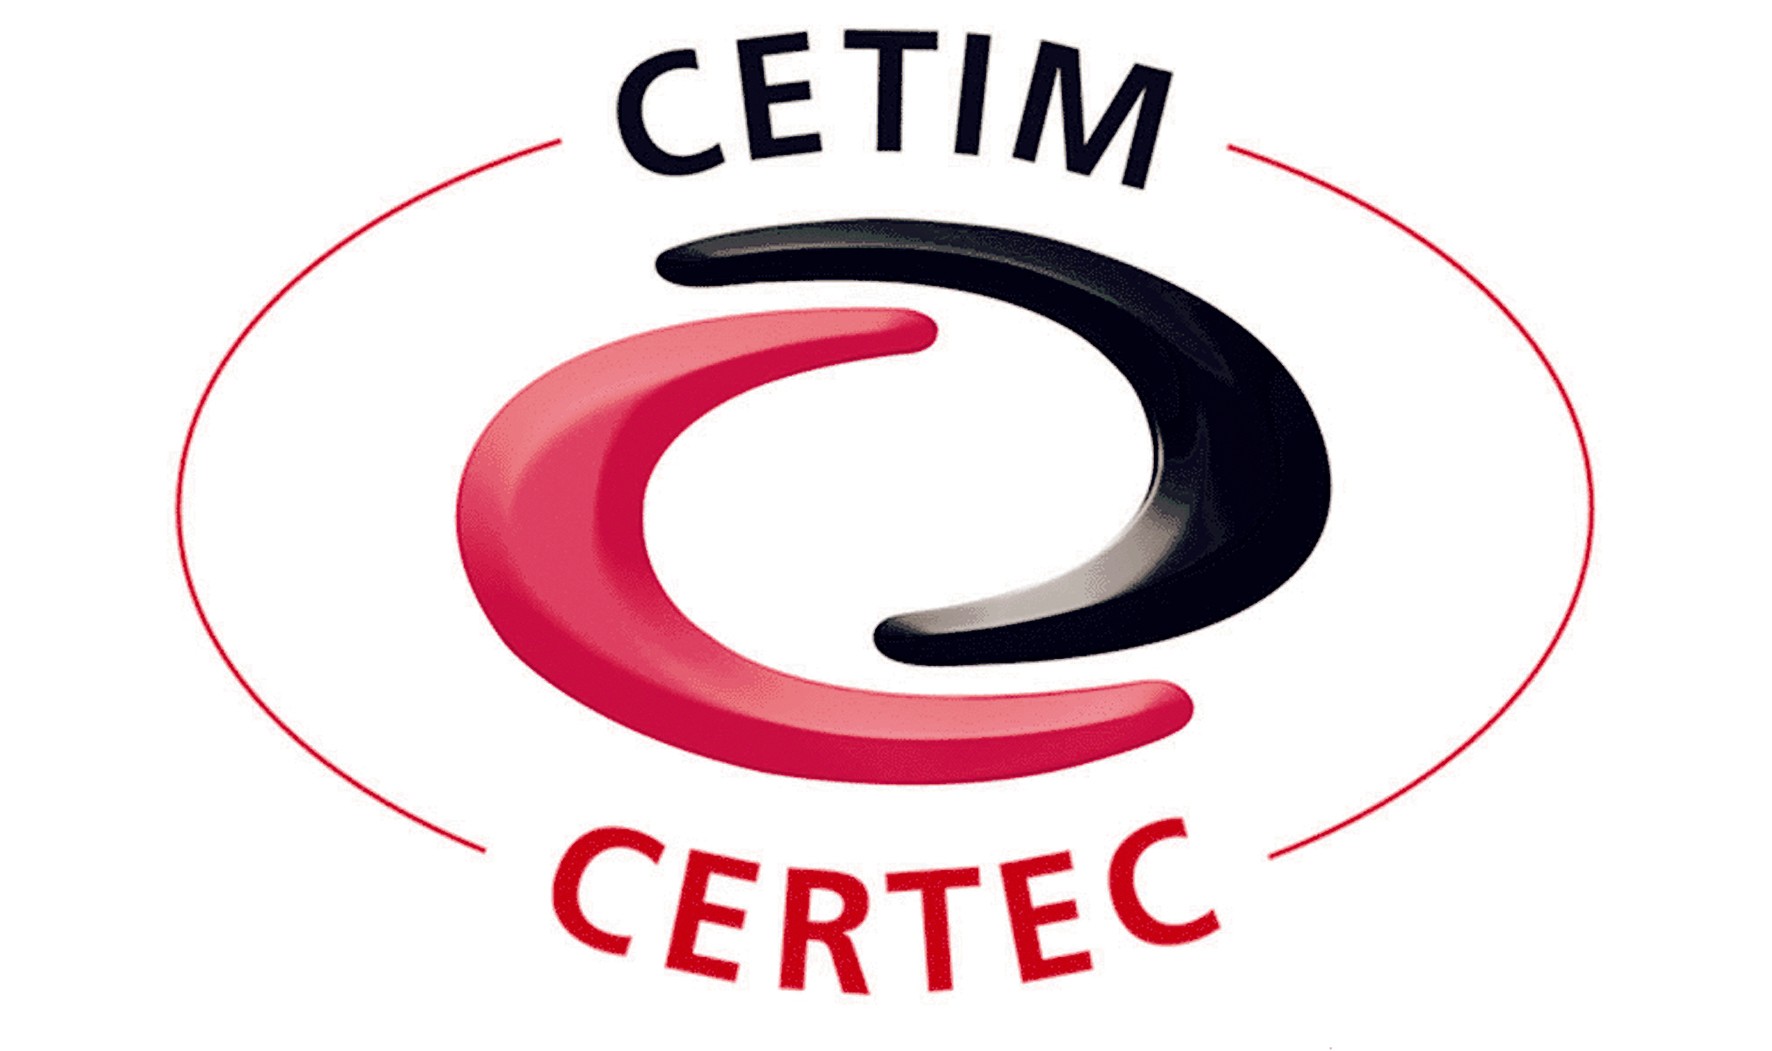 CETIM-CERTEC